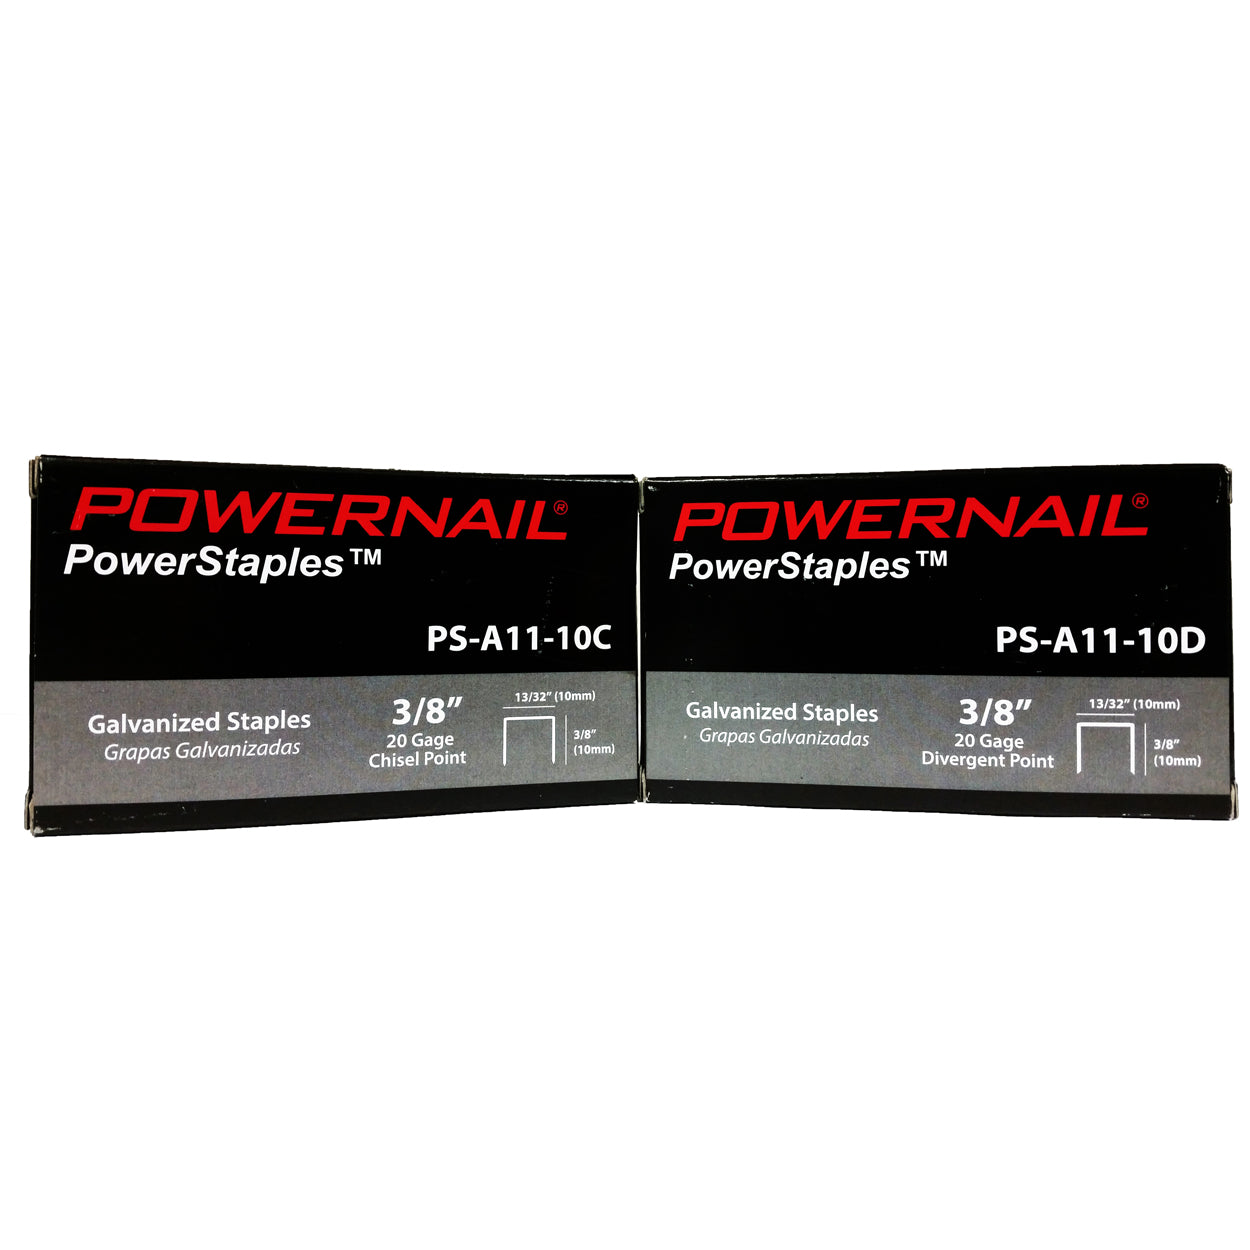 Powernail PSA1110D 20-Gauge 13/32" Crown PowerStaples Fine Wire Staple Box of 5,000